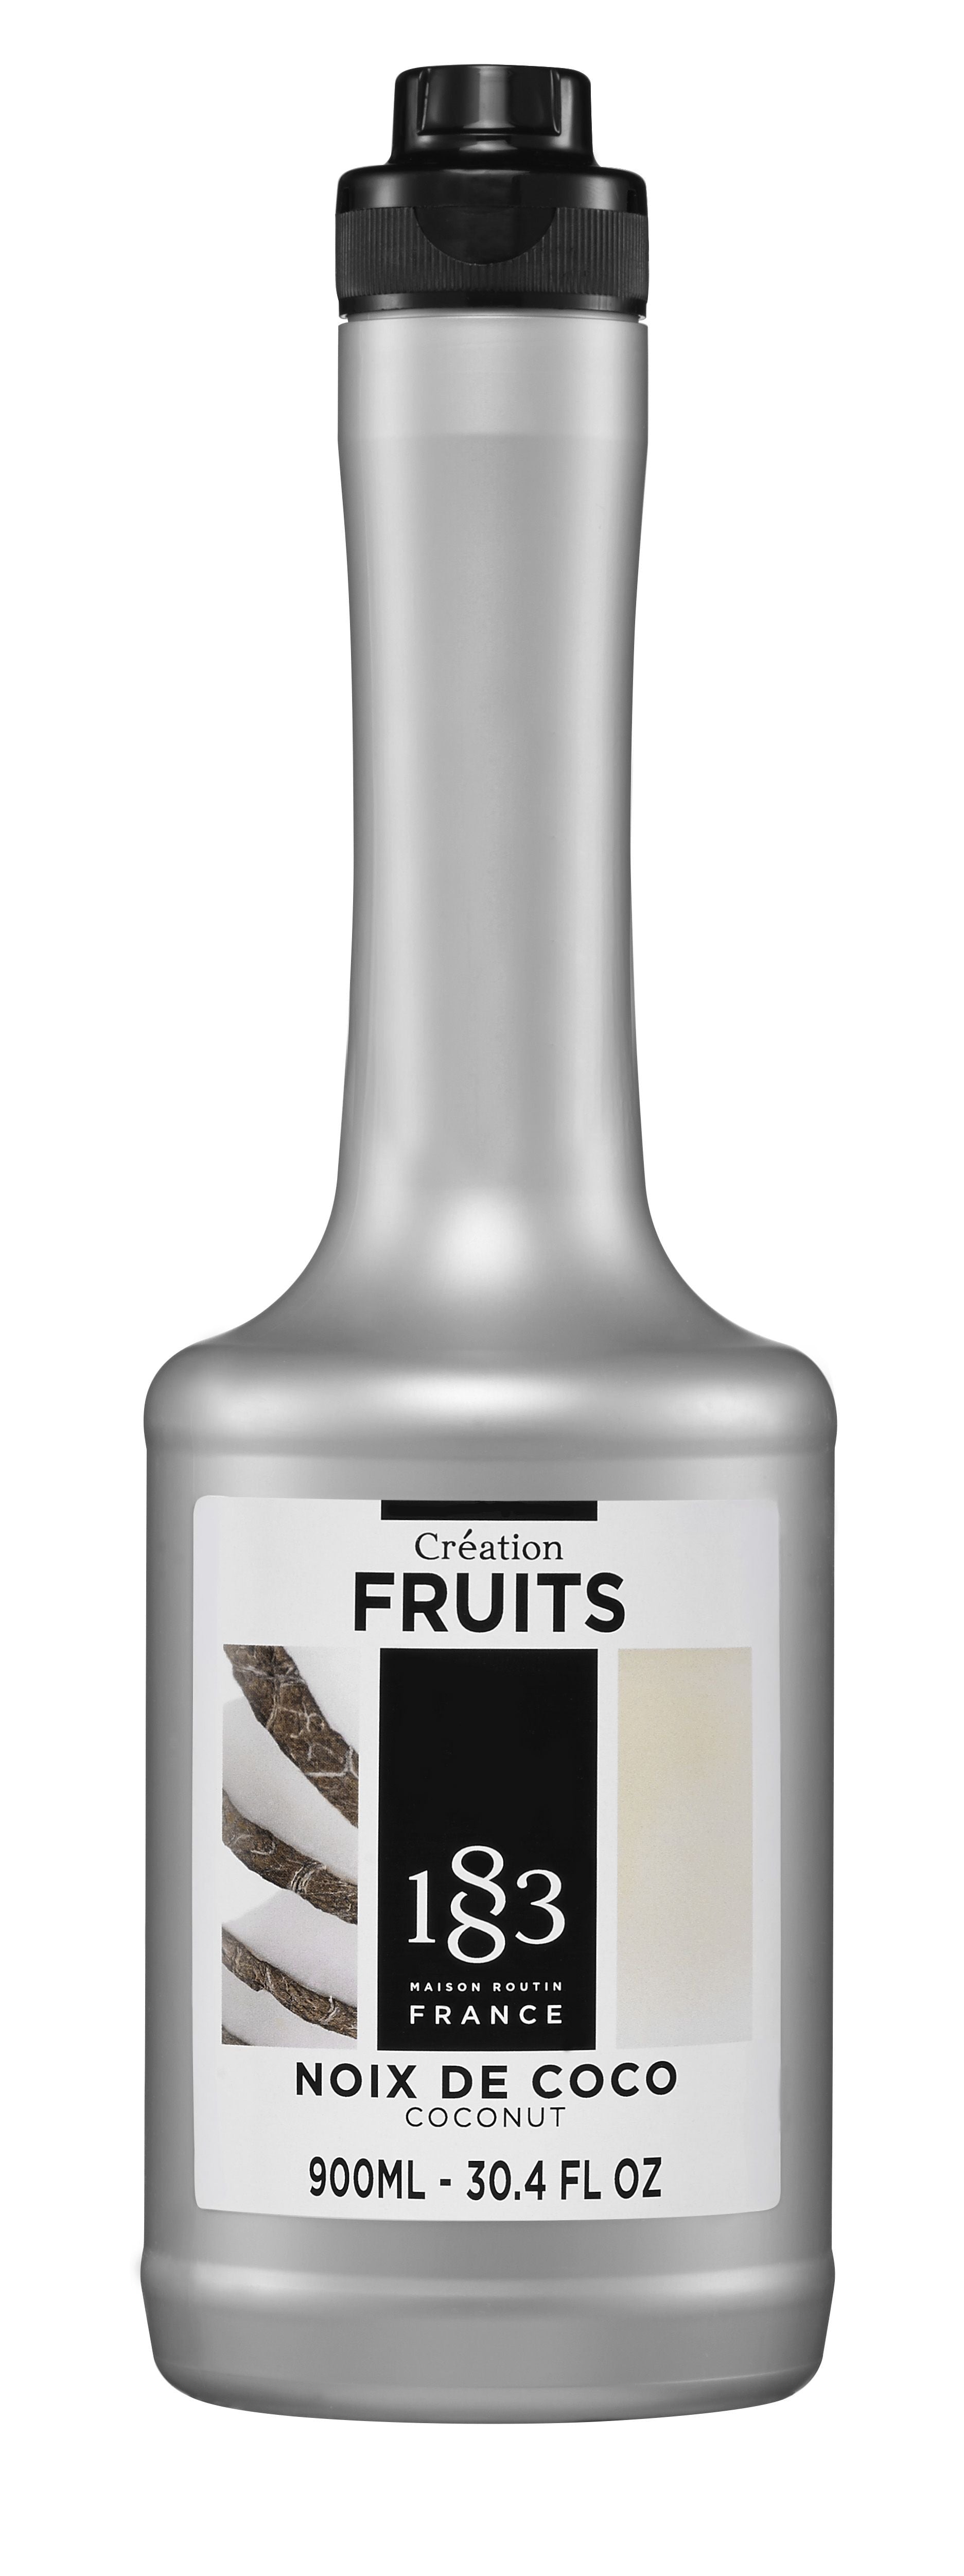 1883 Creation Fruits Fruit Puree - 900ml Plastic Bottle: Coconut